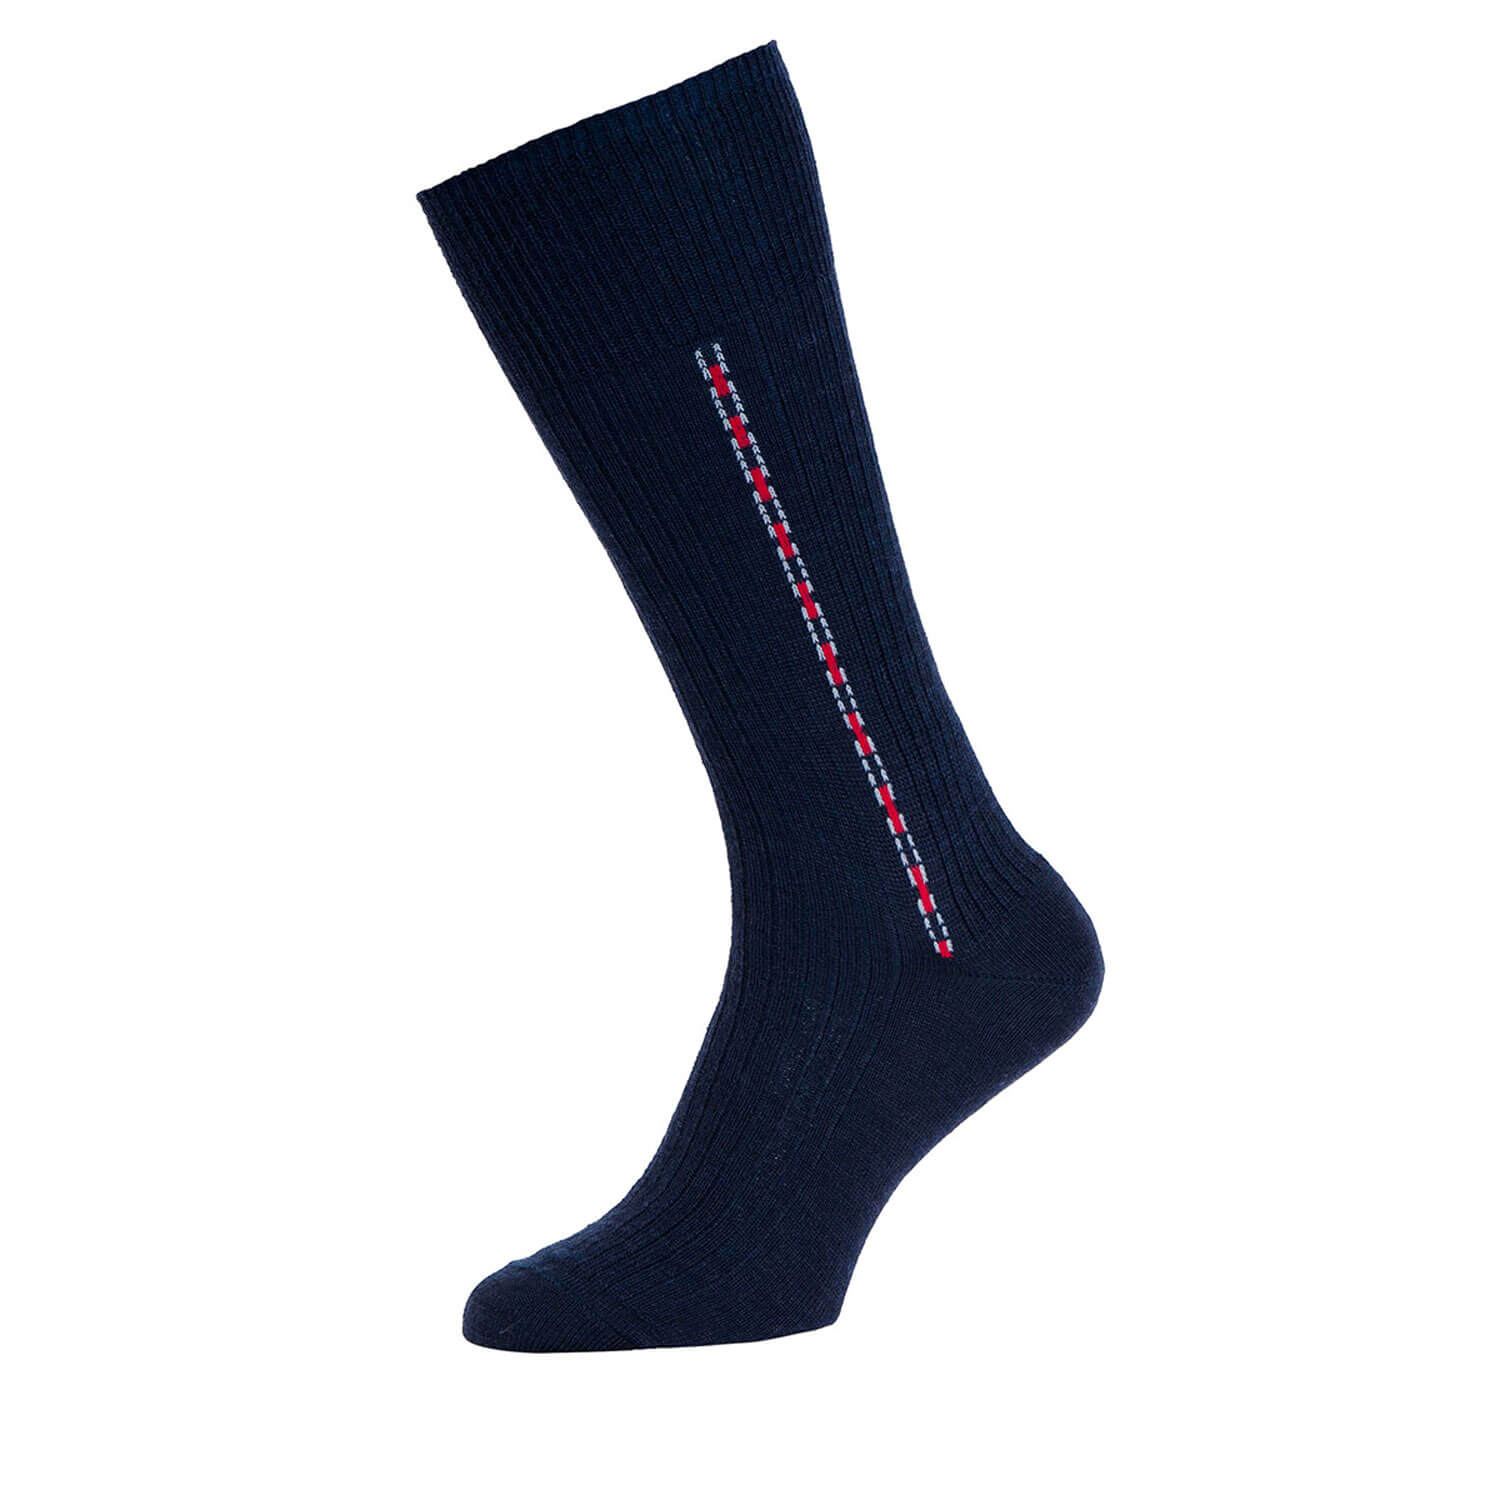 Fancy Half Hose Socks - Navy